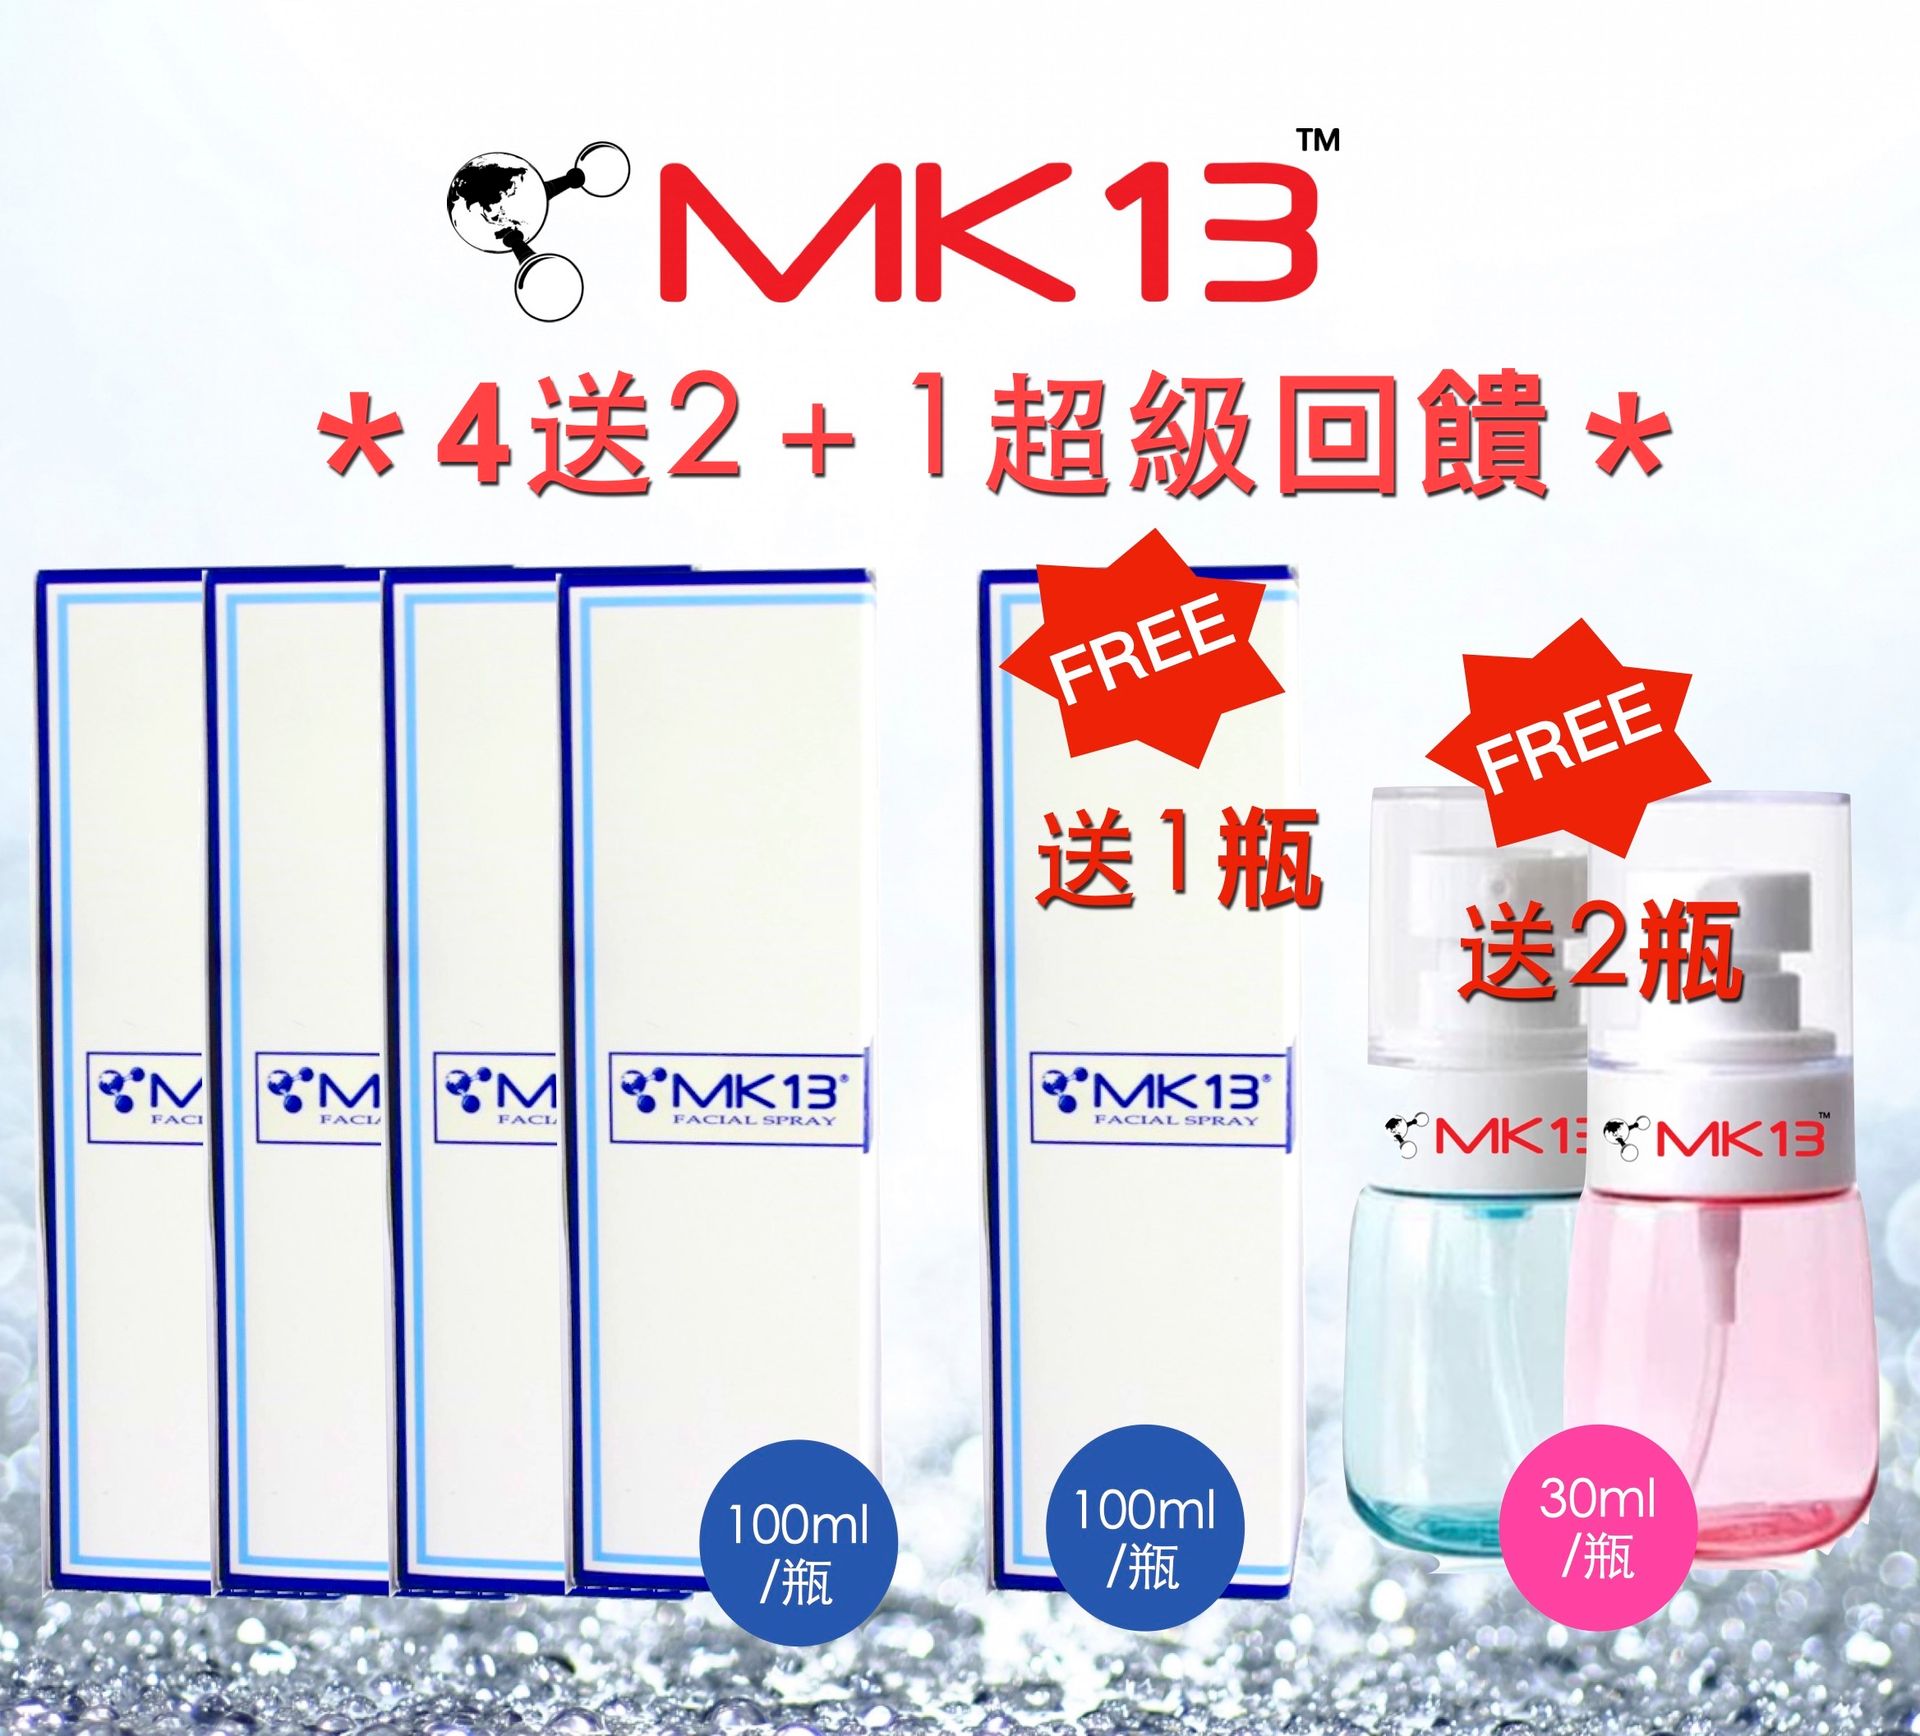 MK13-4 Facial Spray 高科技脸部护理水 (4 送 2＋1 配套)